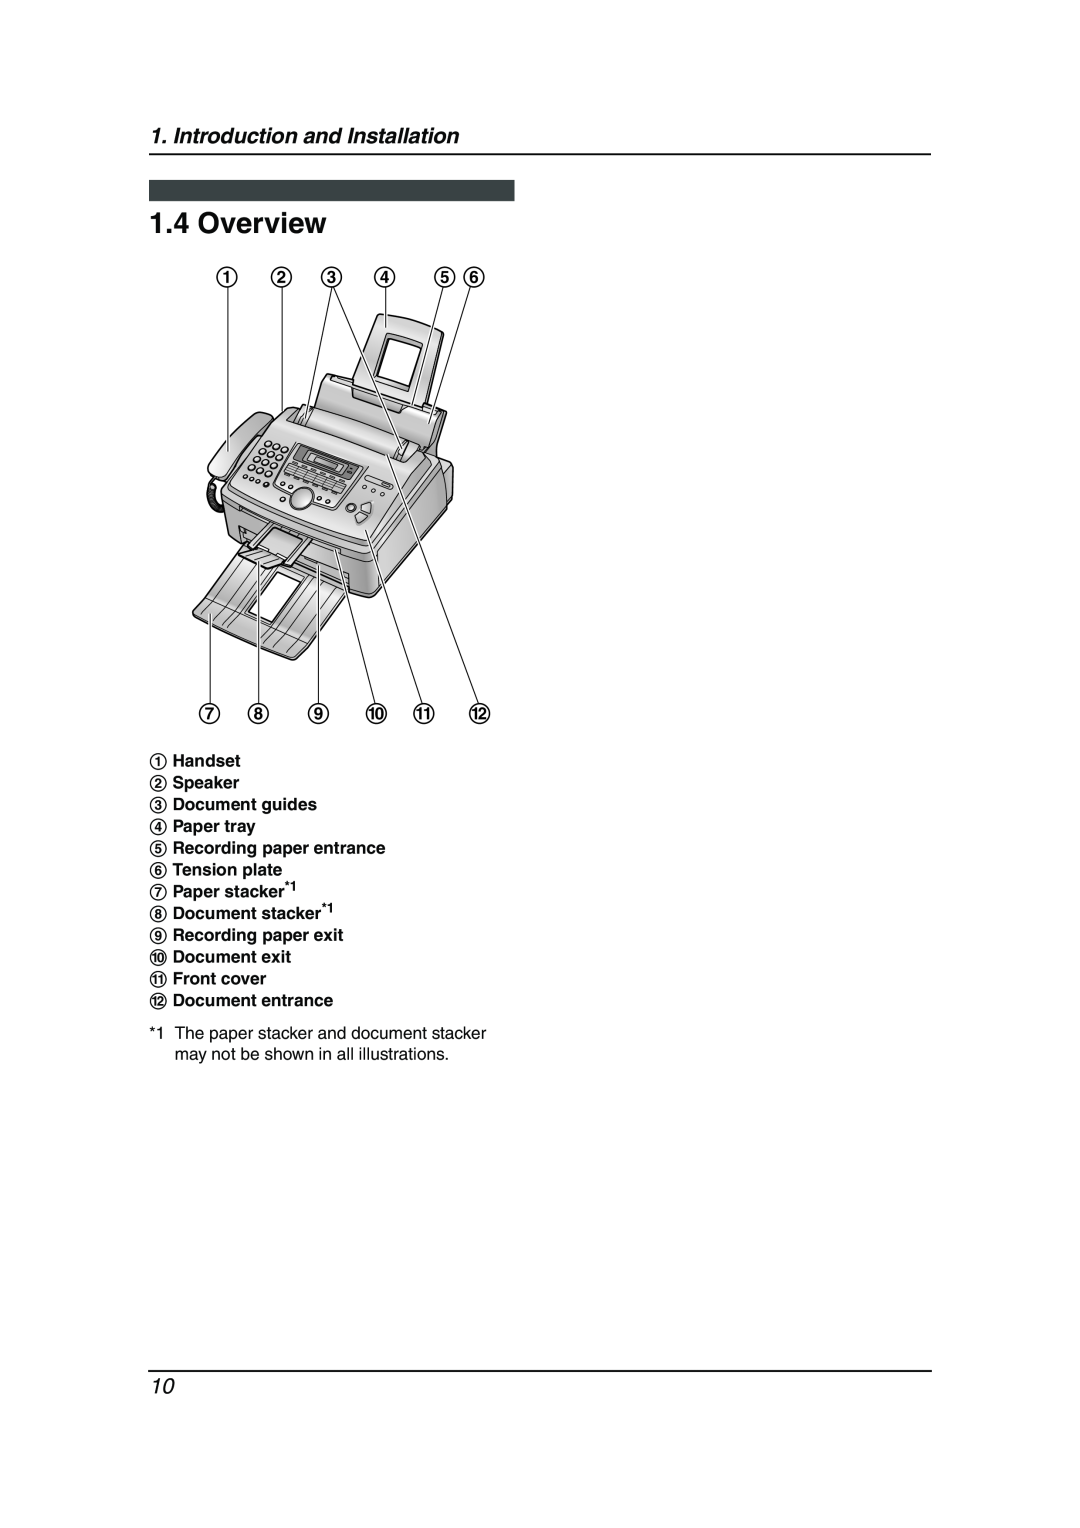 Panasonic KX-FL511AL manual Overview, Introduction and Installation, 1 2 3 4 5 7 8 9 j k l 